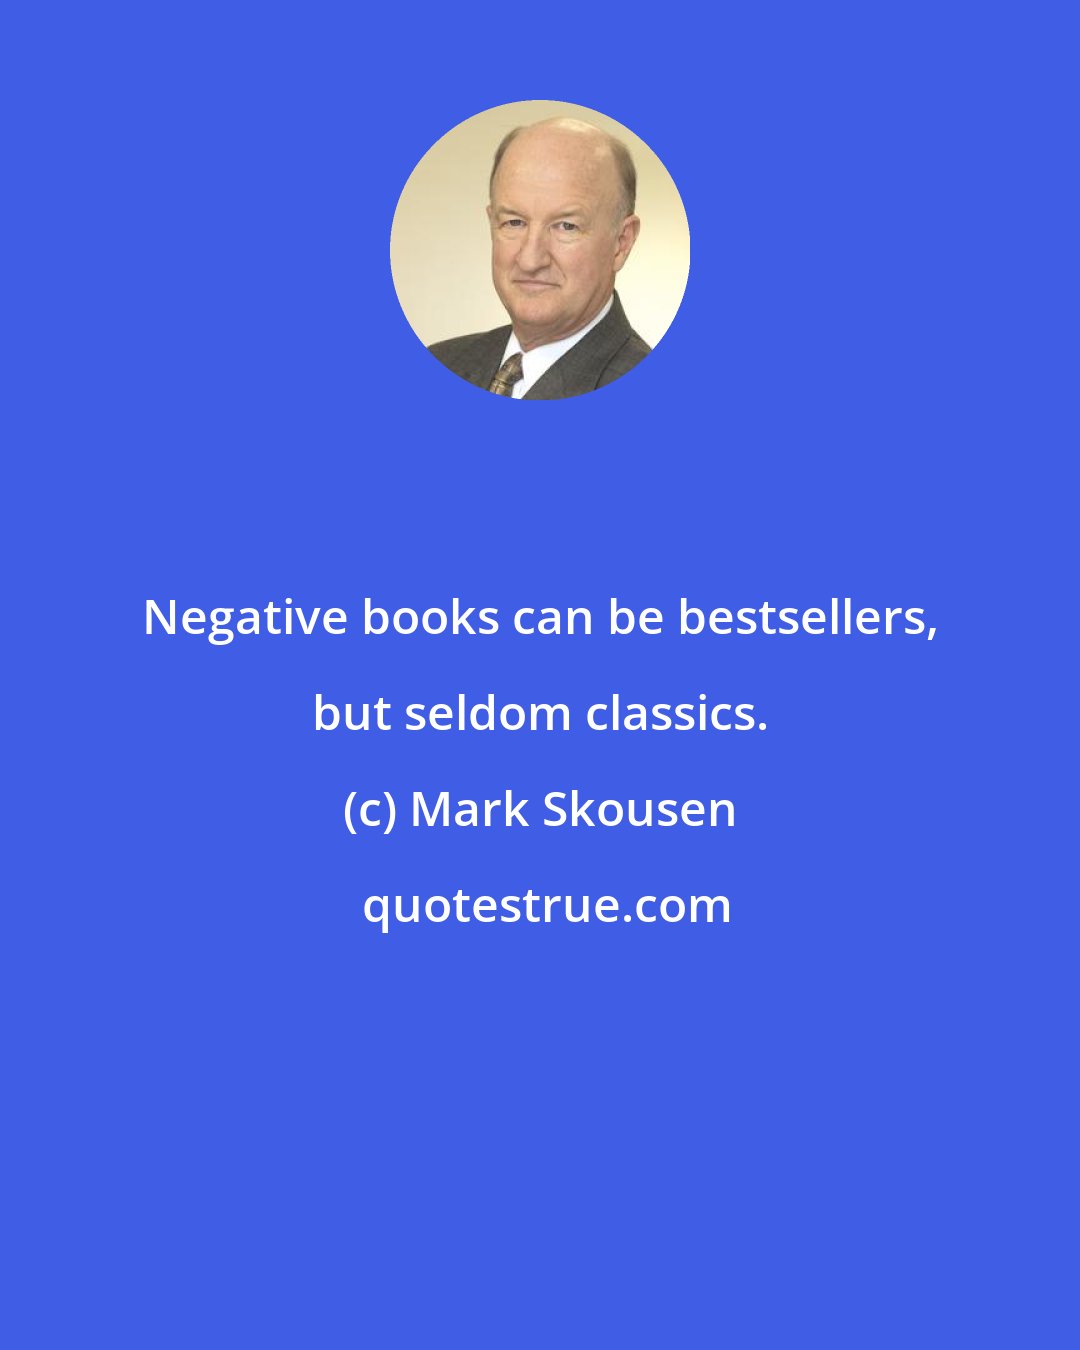 Mark Skousen: Negative books can be bestsellers, but seldom classics.